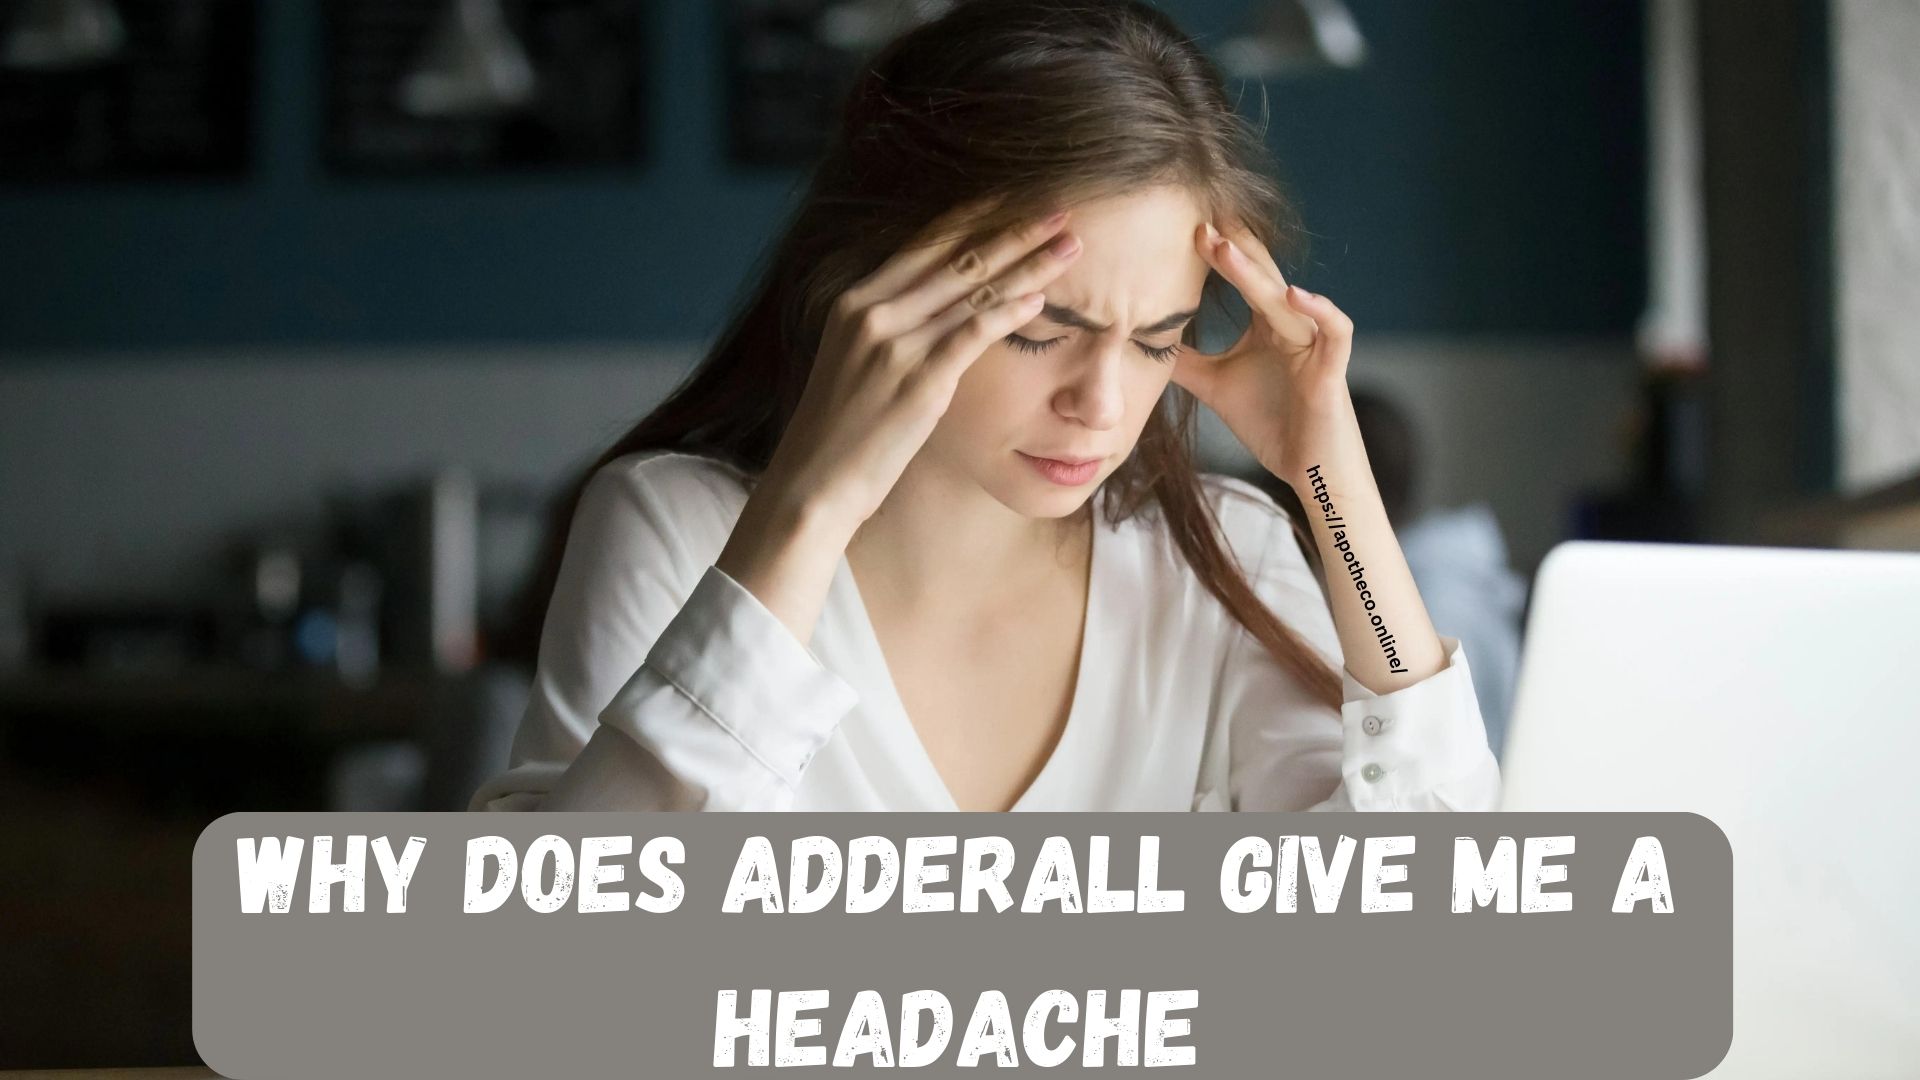 Adderall give me a headache